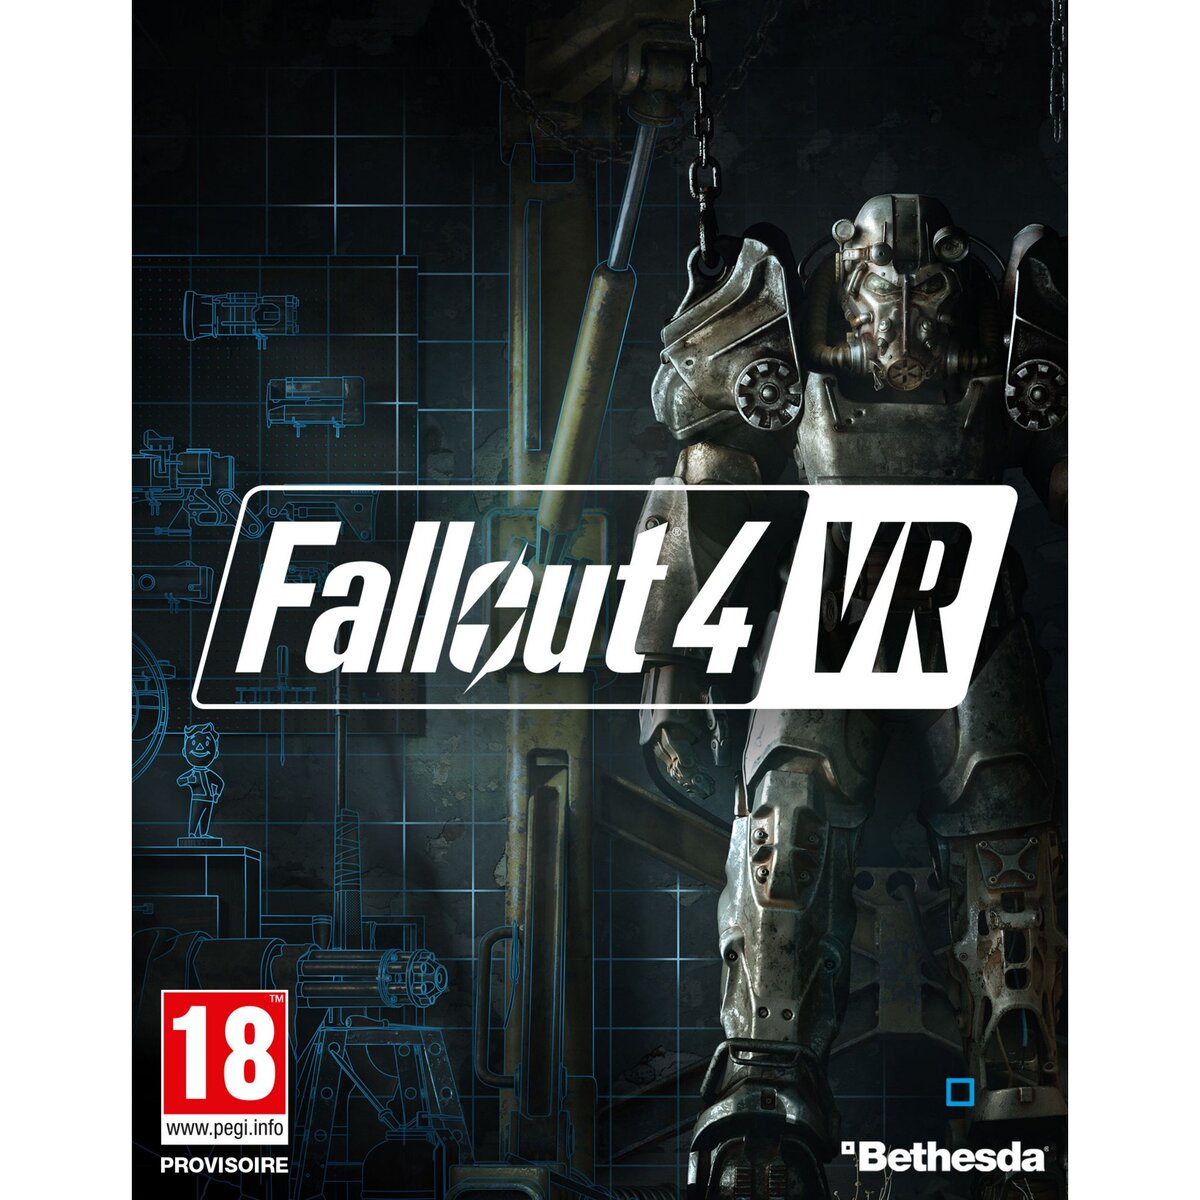 Fallout 4 VR PC